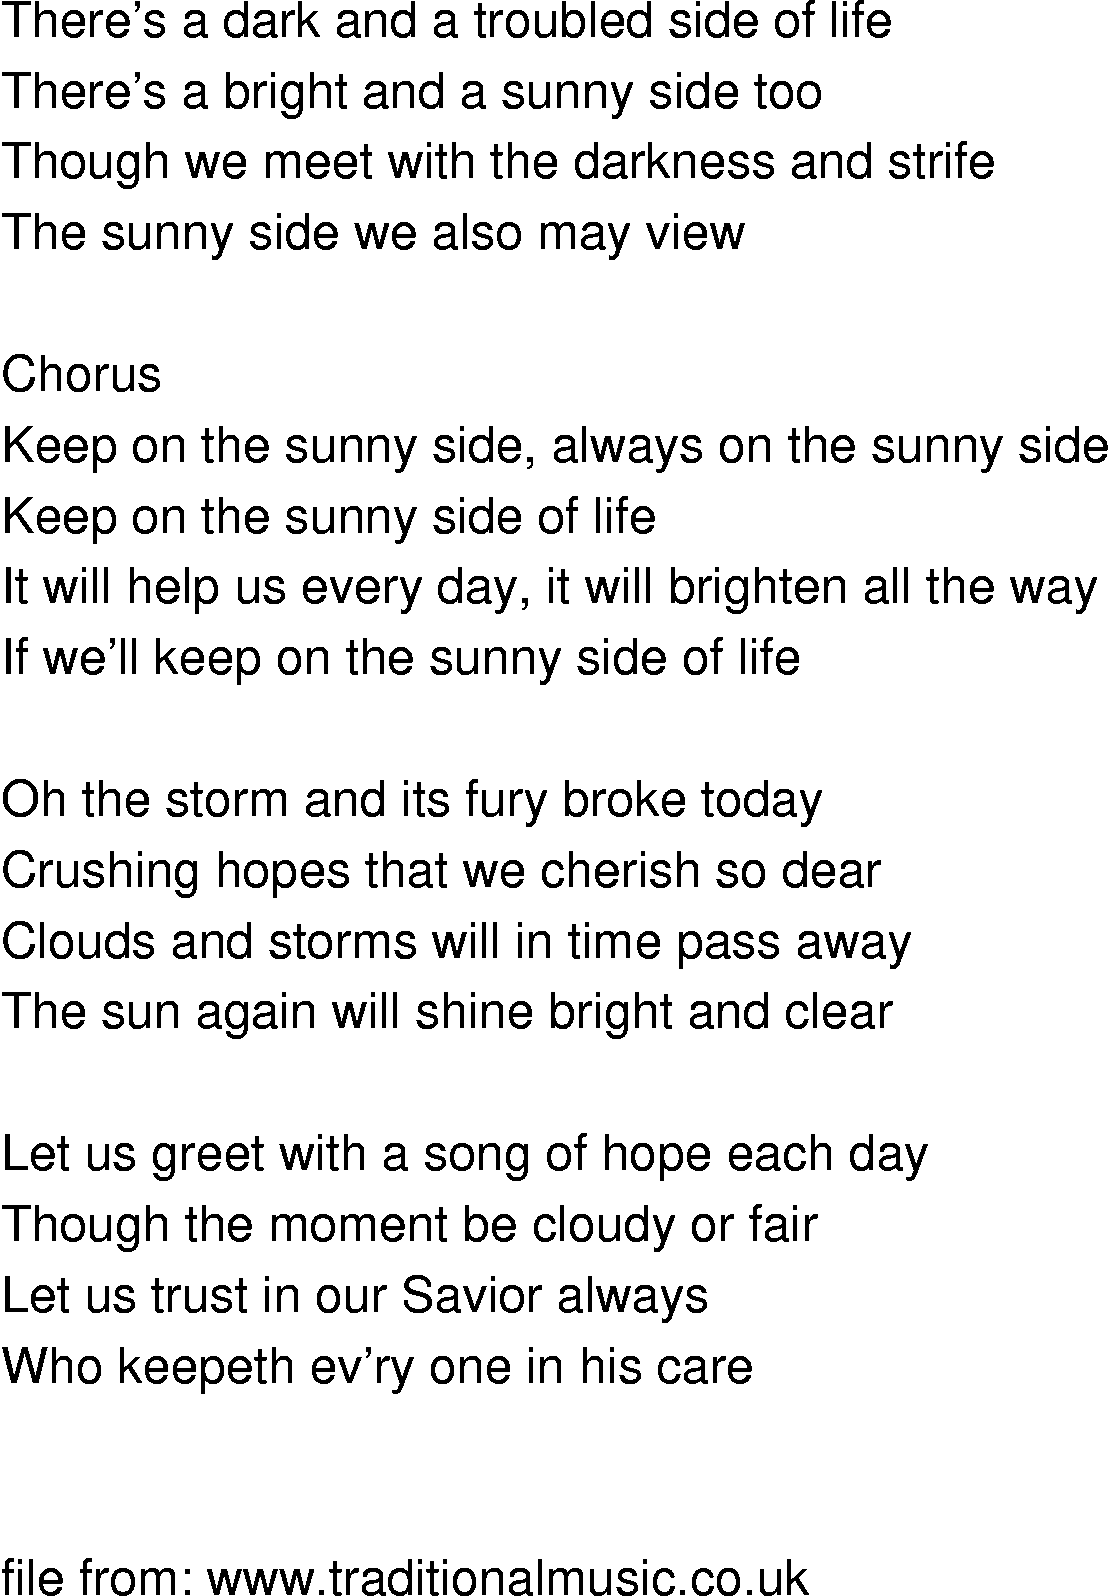 Old-Time (oldtimey) Song Lyrics - keep on the sunny side